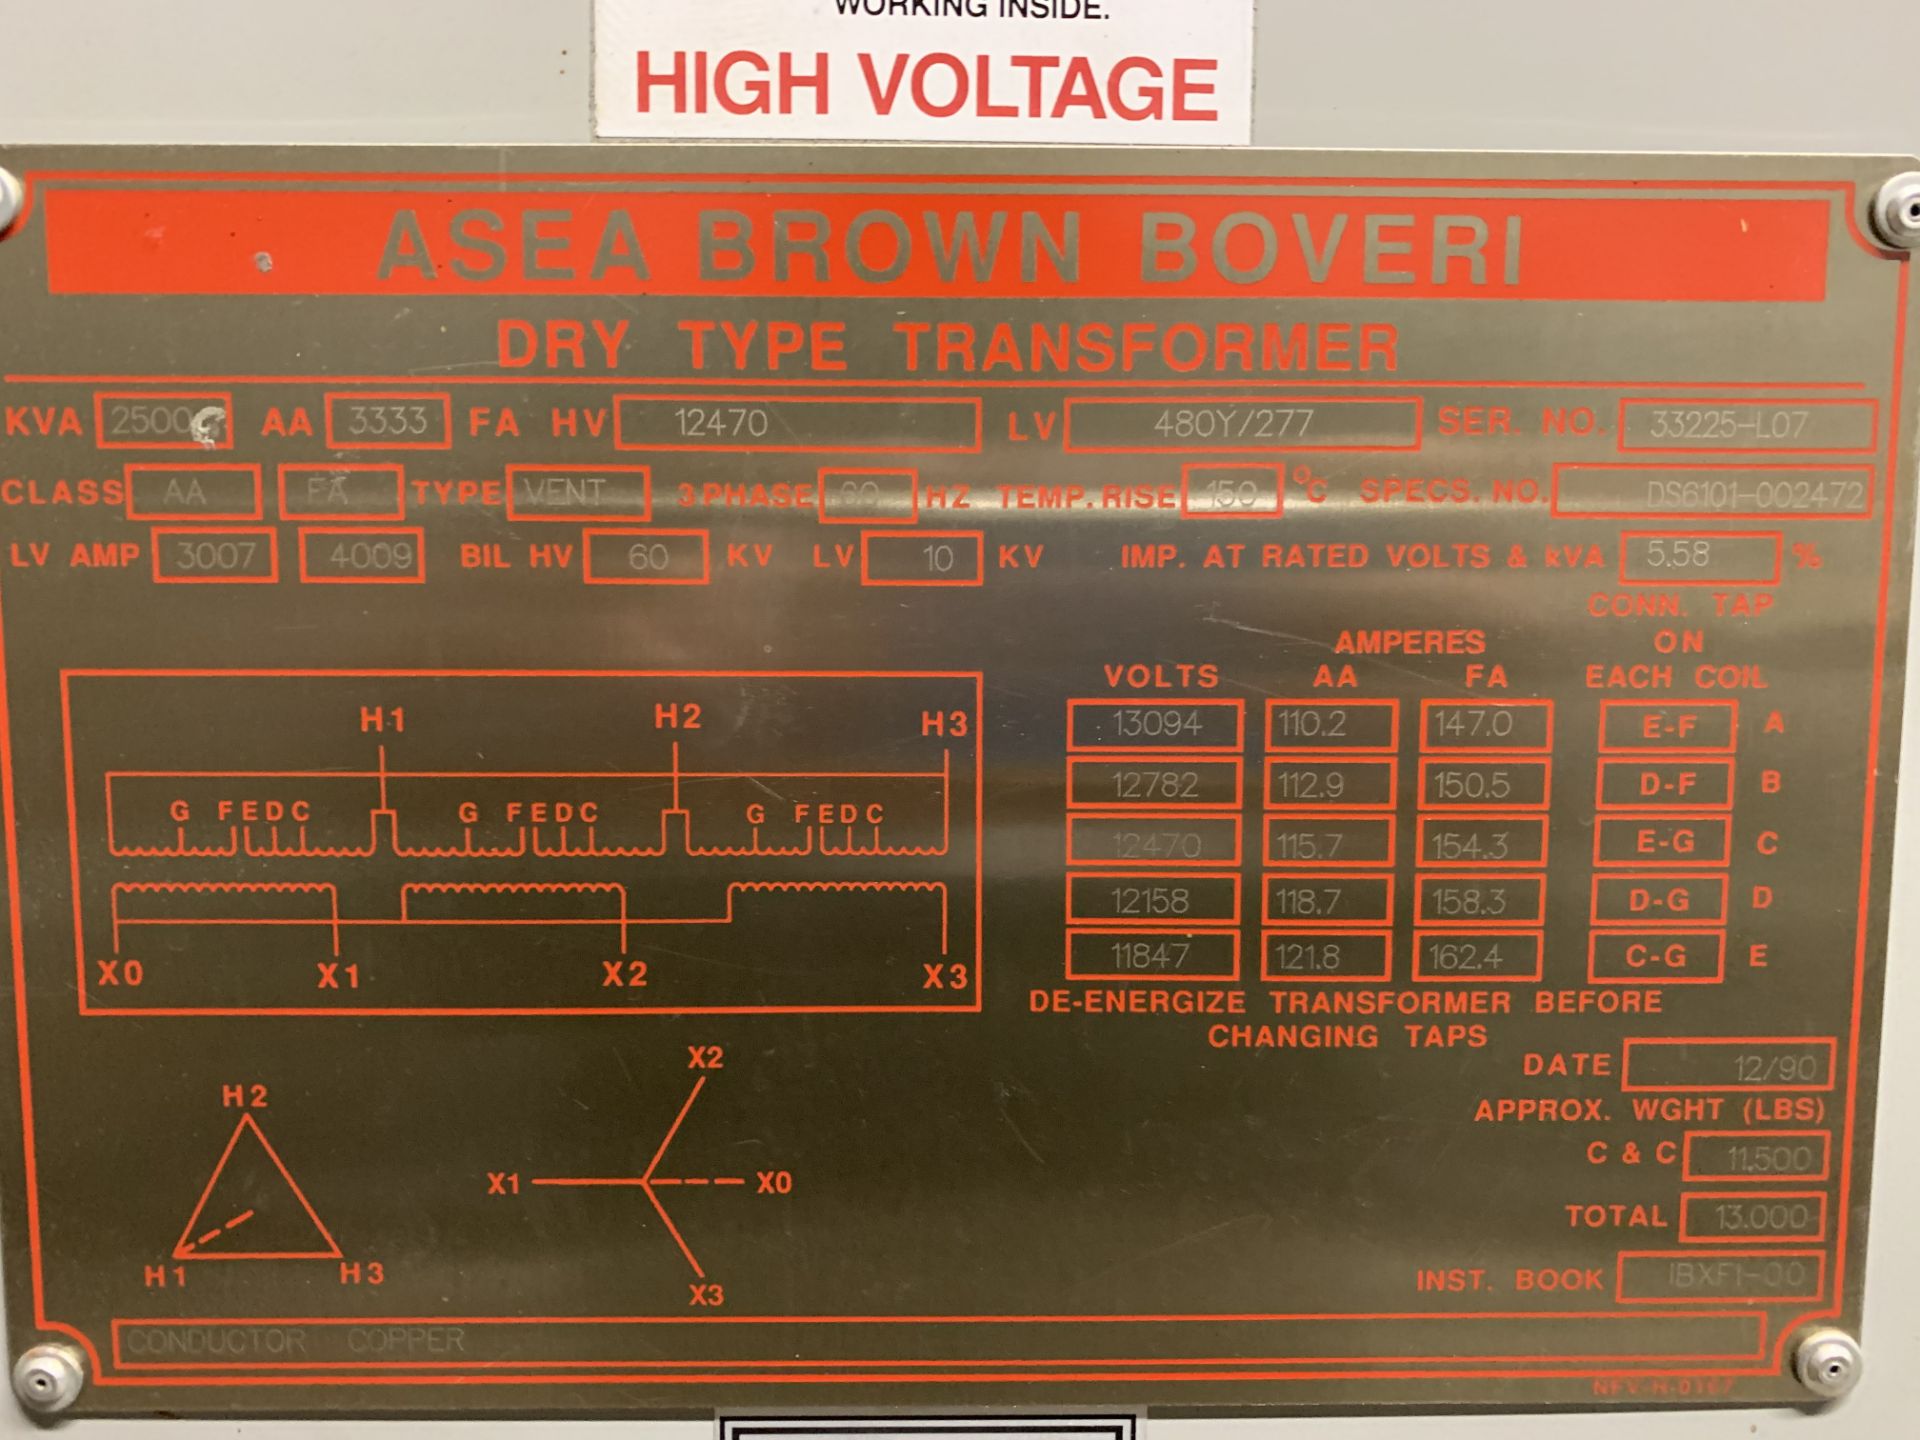 ABB ASEA Brown Boveri Drive Type Transformer 2500 kva 12470 hv 480HV/277LV - Image 2 of 3